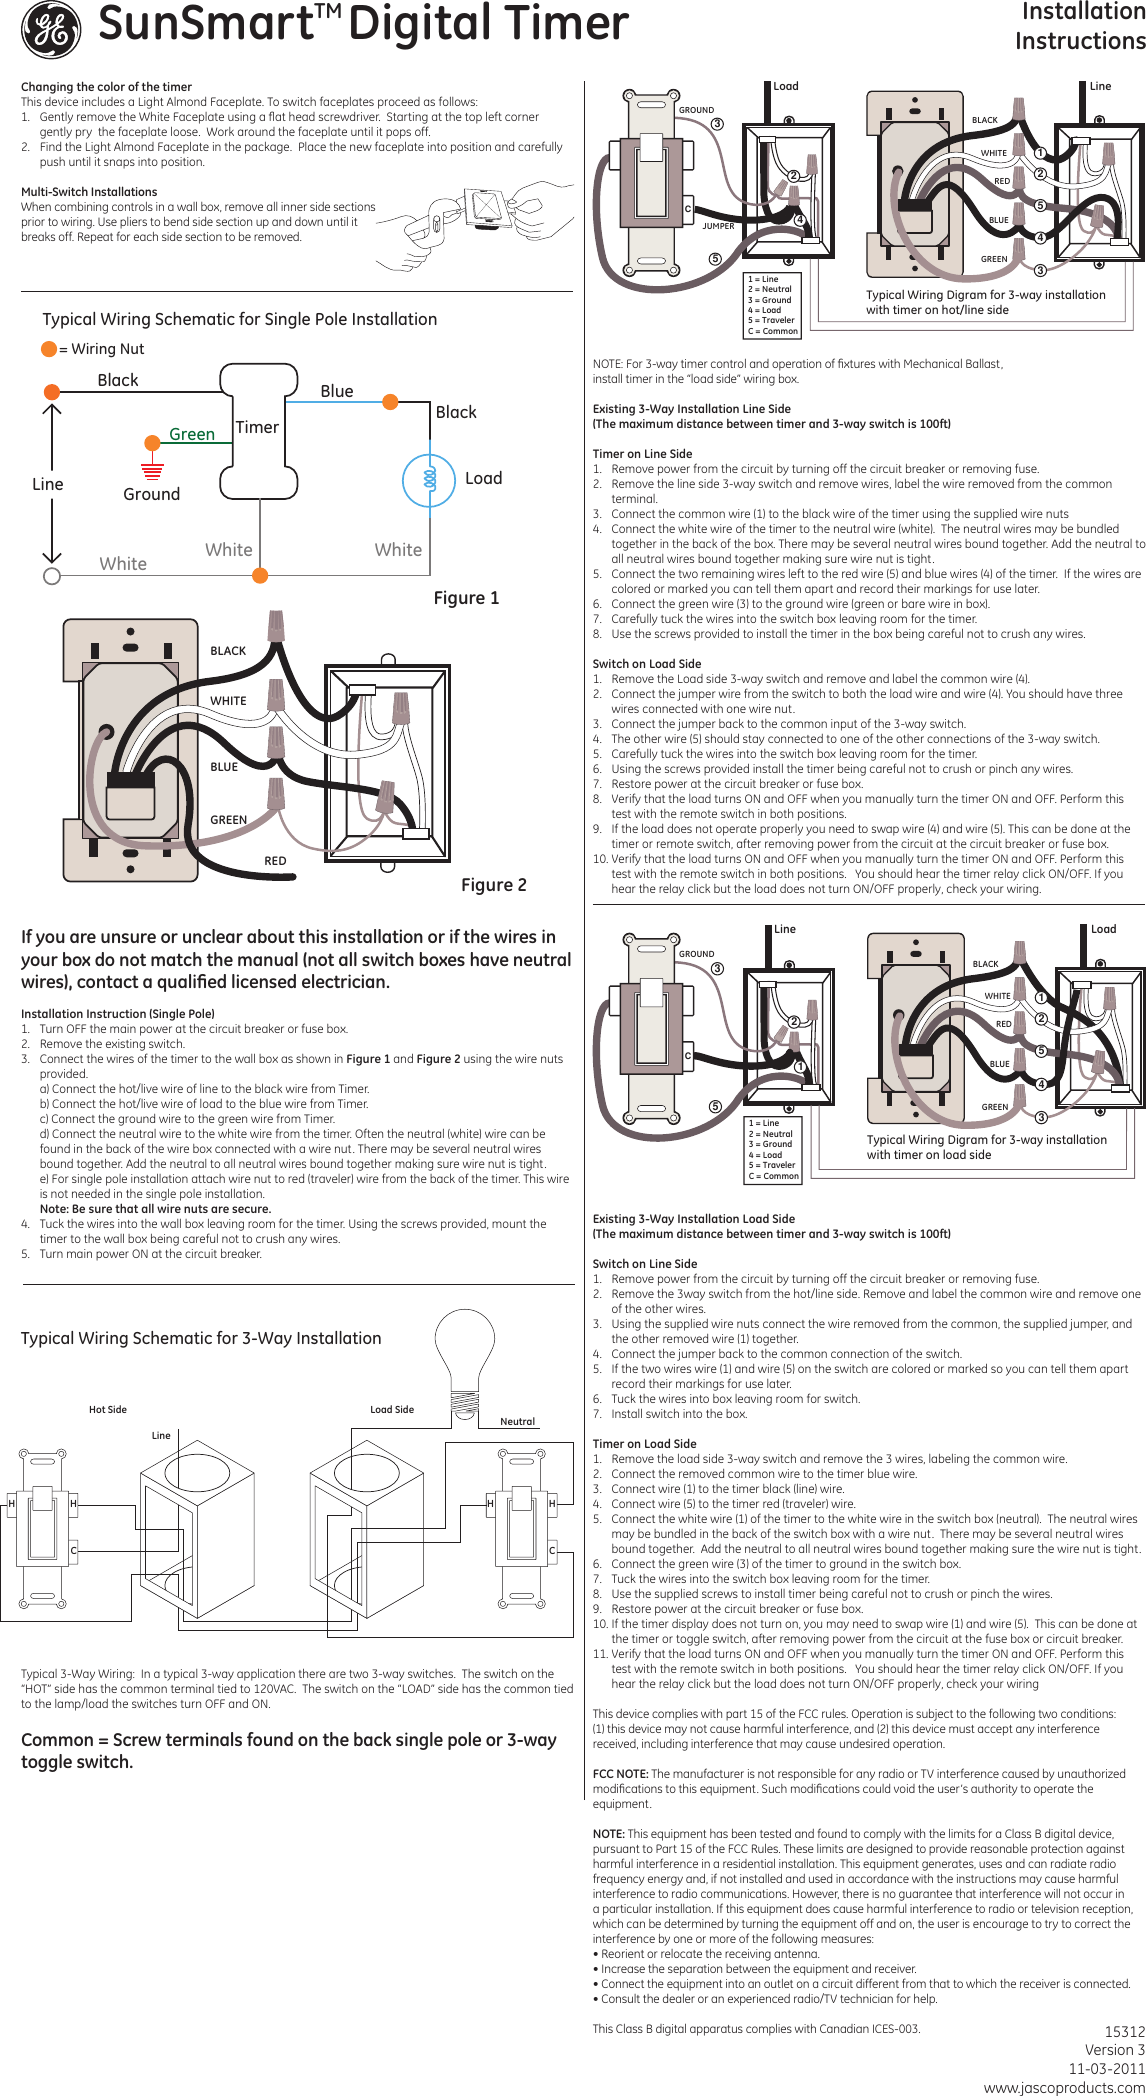 Page 1 of 2 - Ge-Appliances Ge-15312-Sunsmart-Digital-Timer-Quick-Reference-Guide